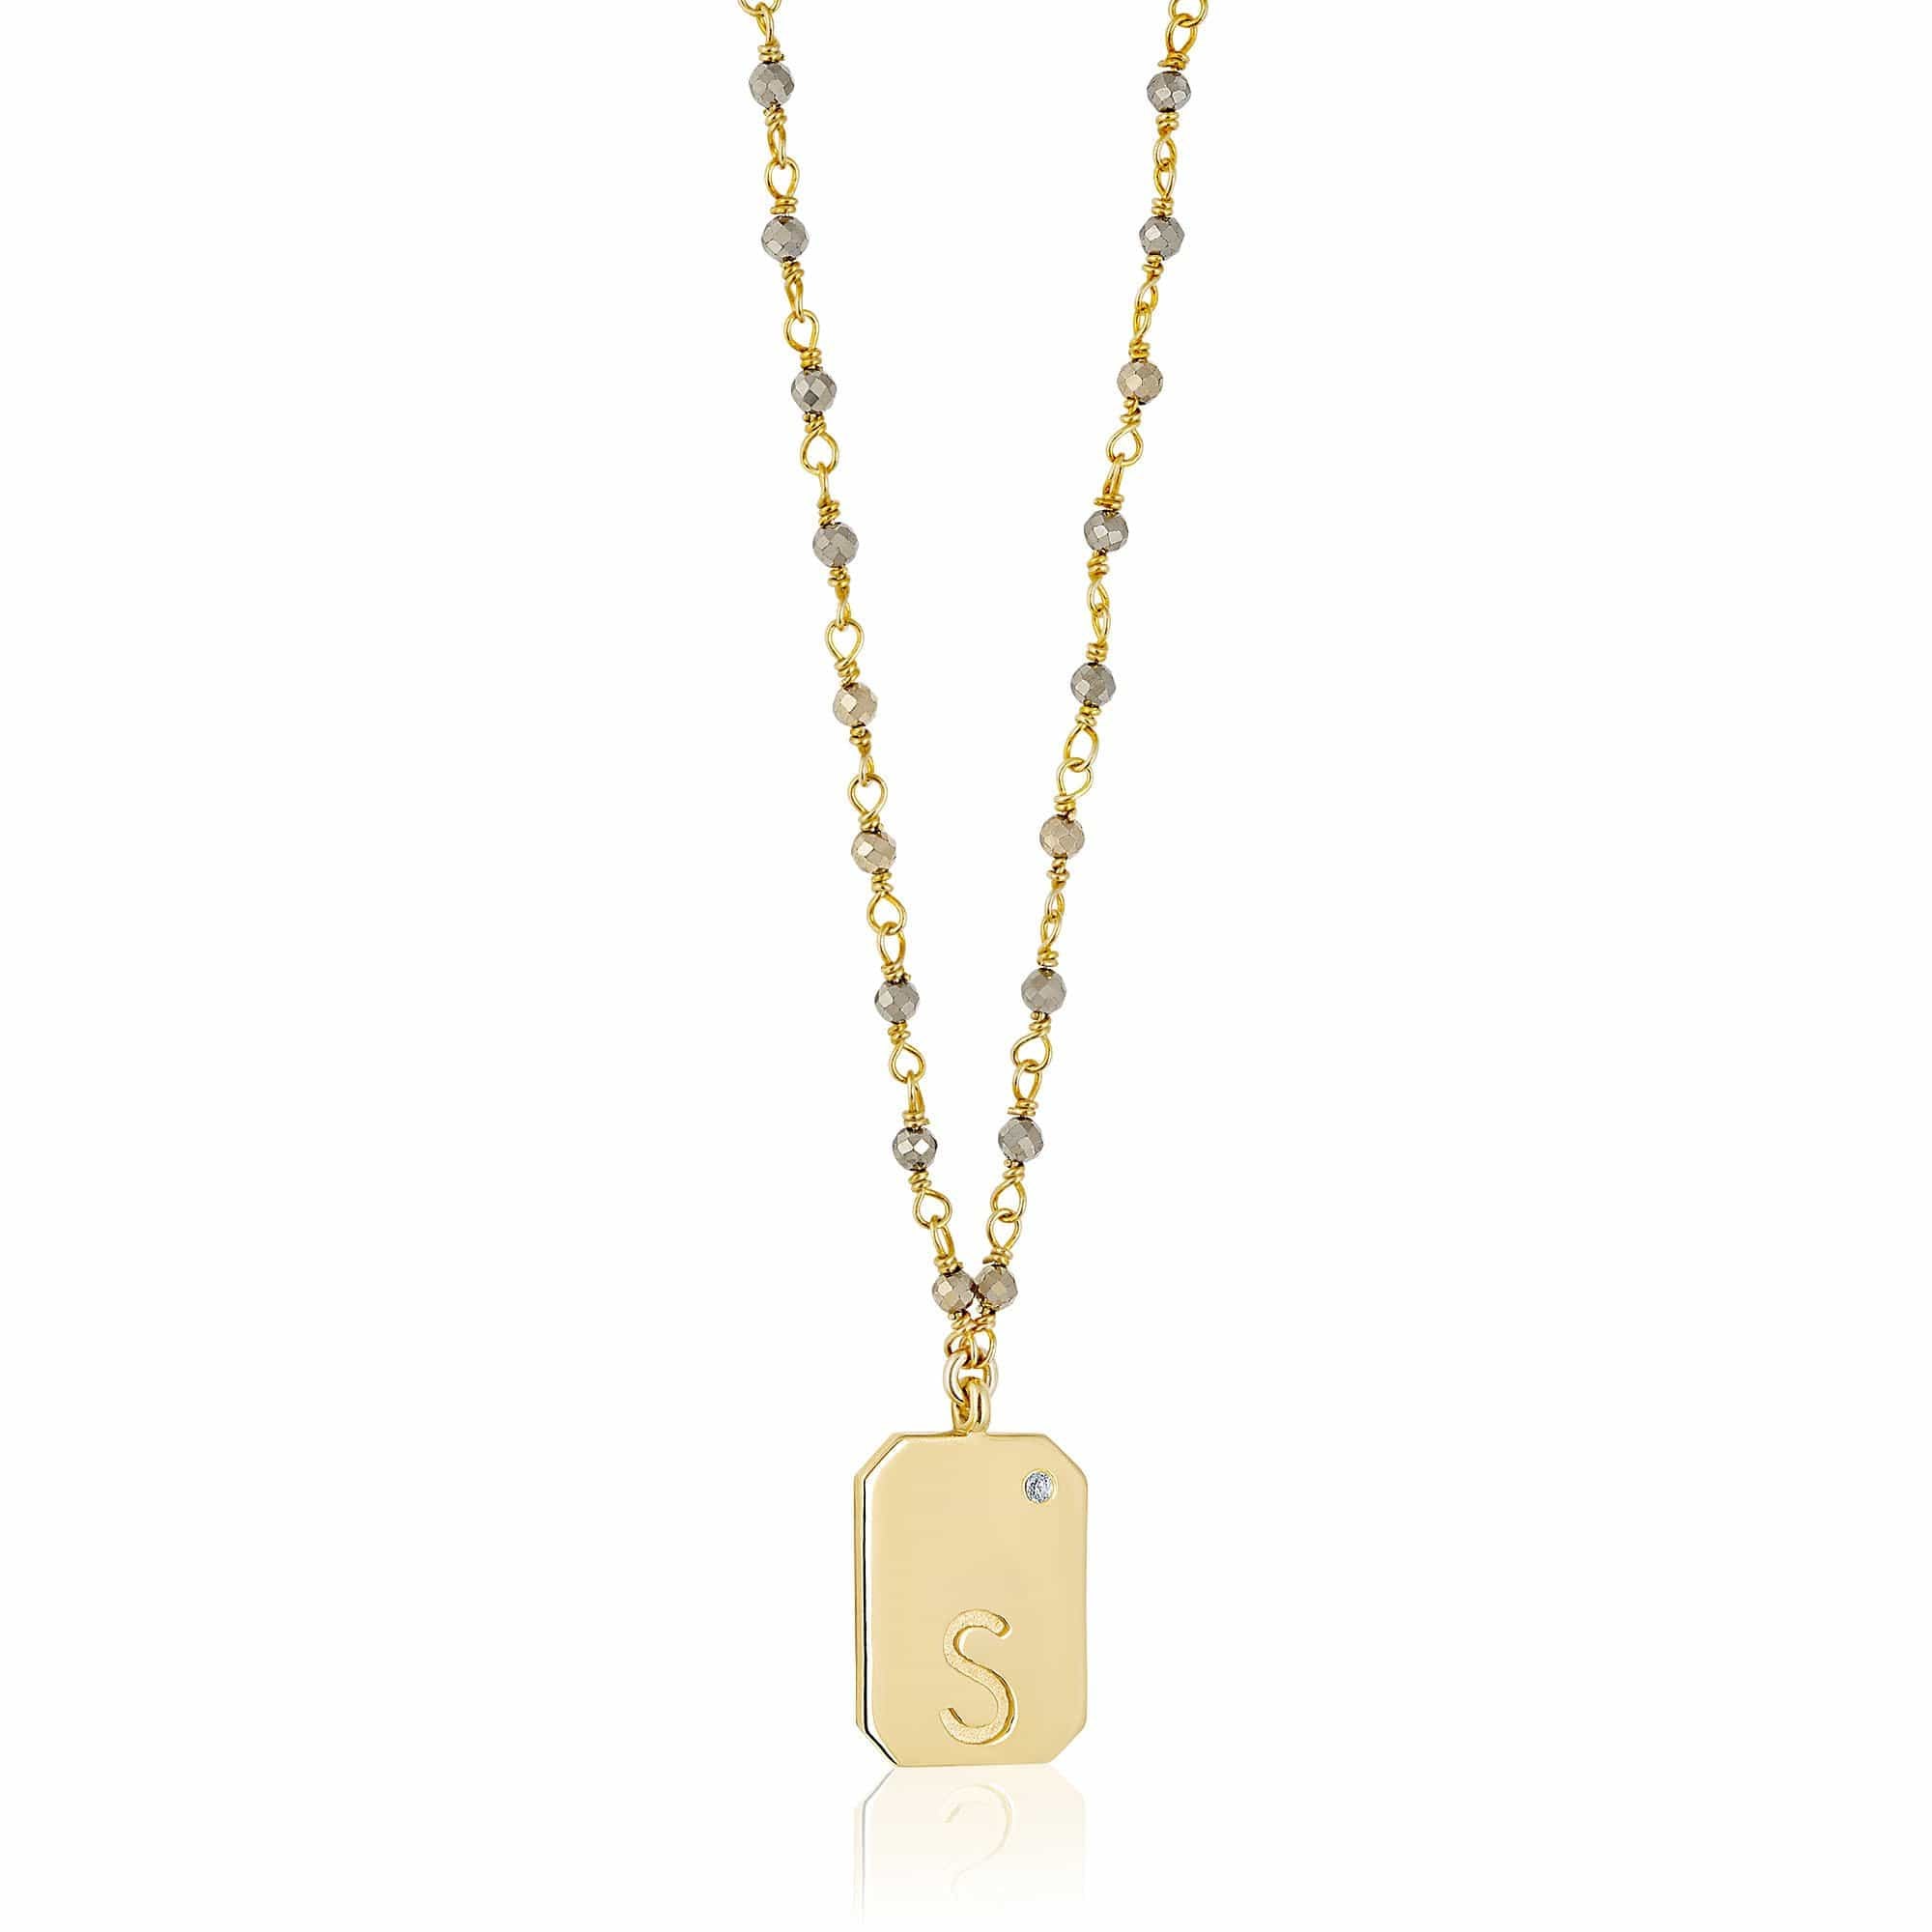 ela rae dog tag initial semi precious necklace pyrite 14k yellow gold plate white zircon